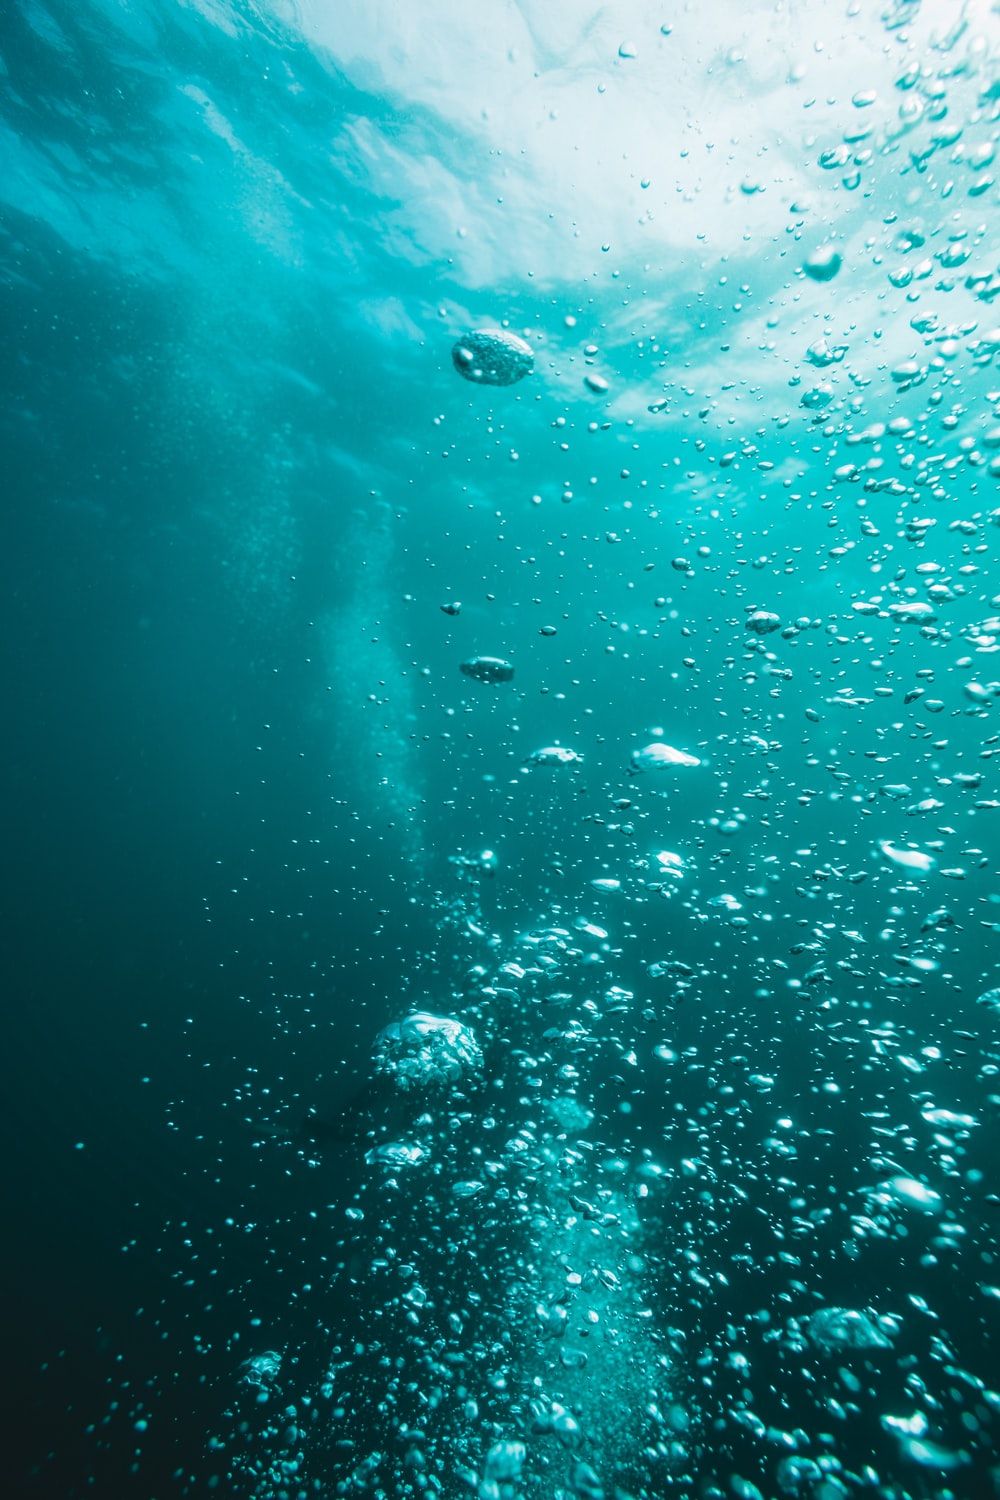 Underwater Image. Download Free Image